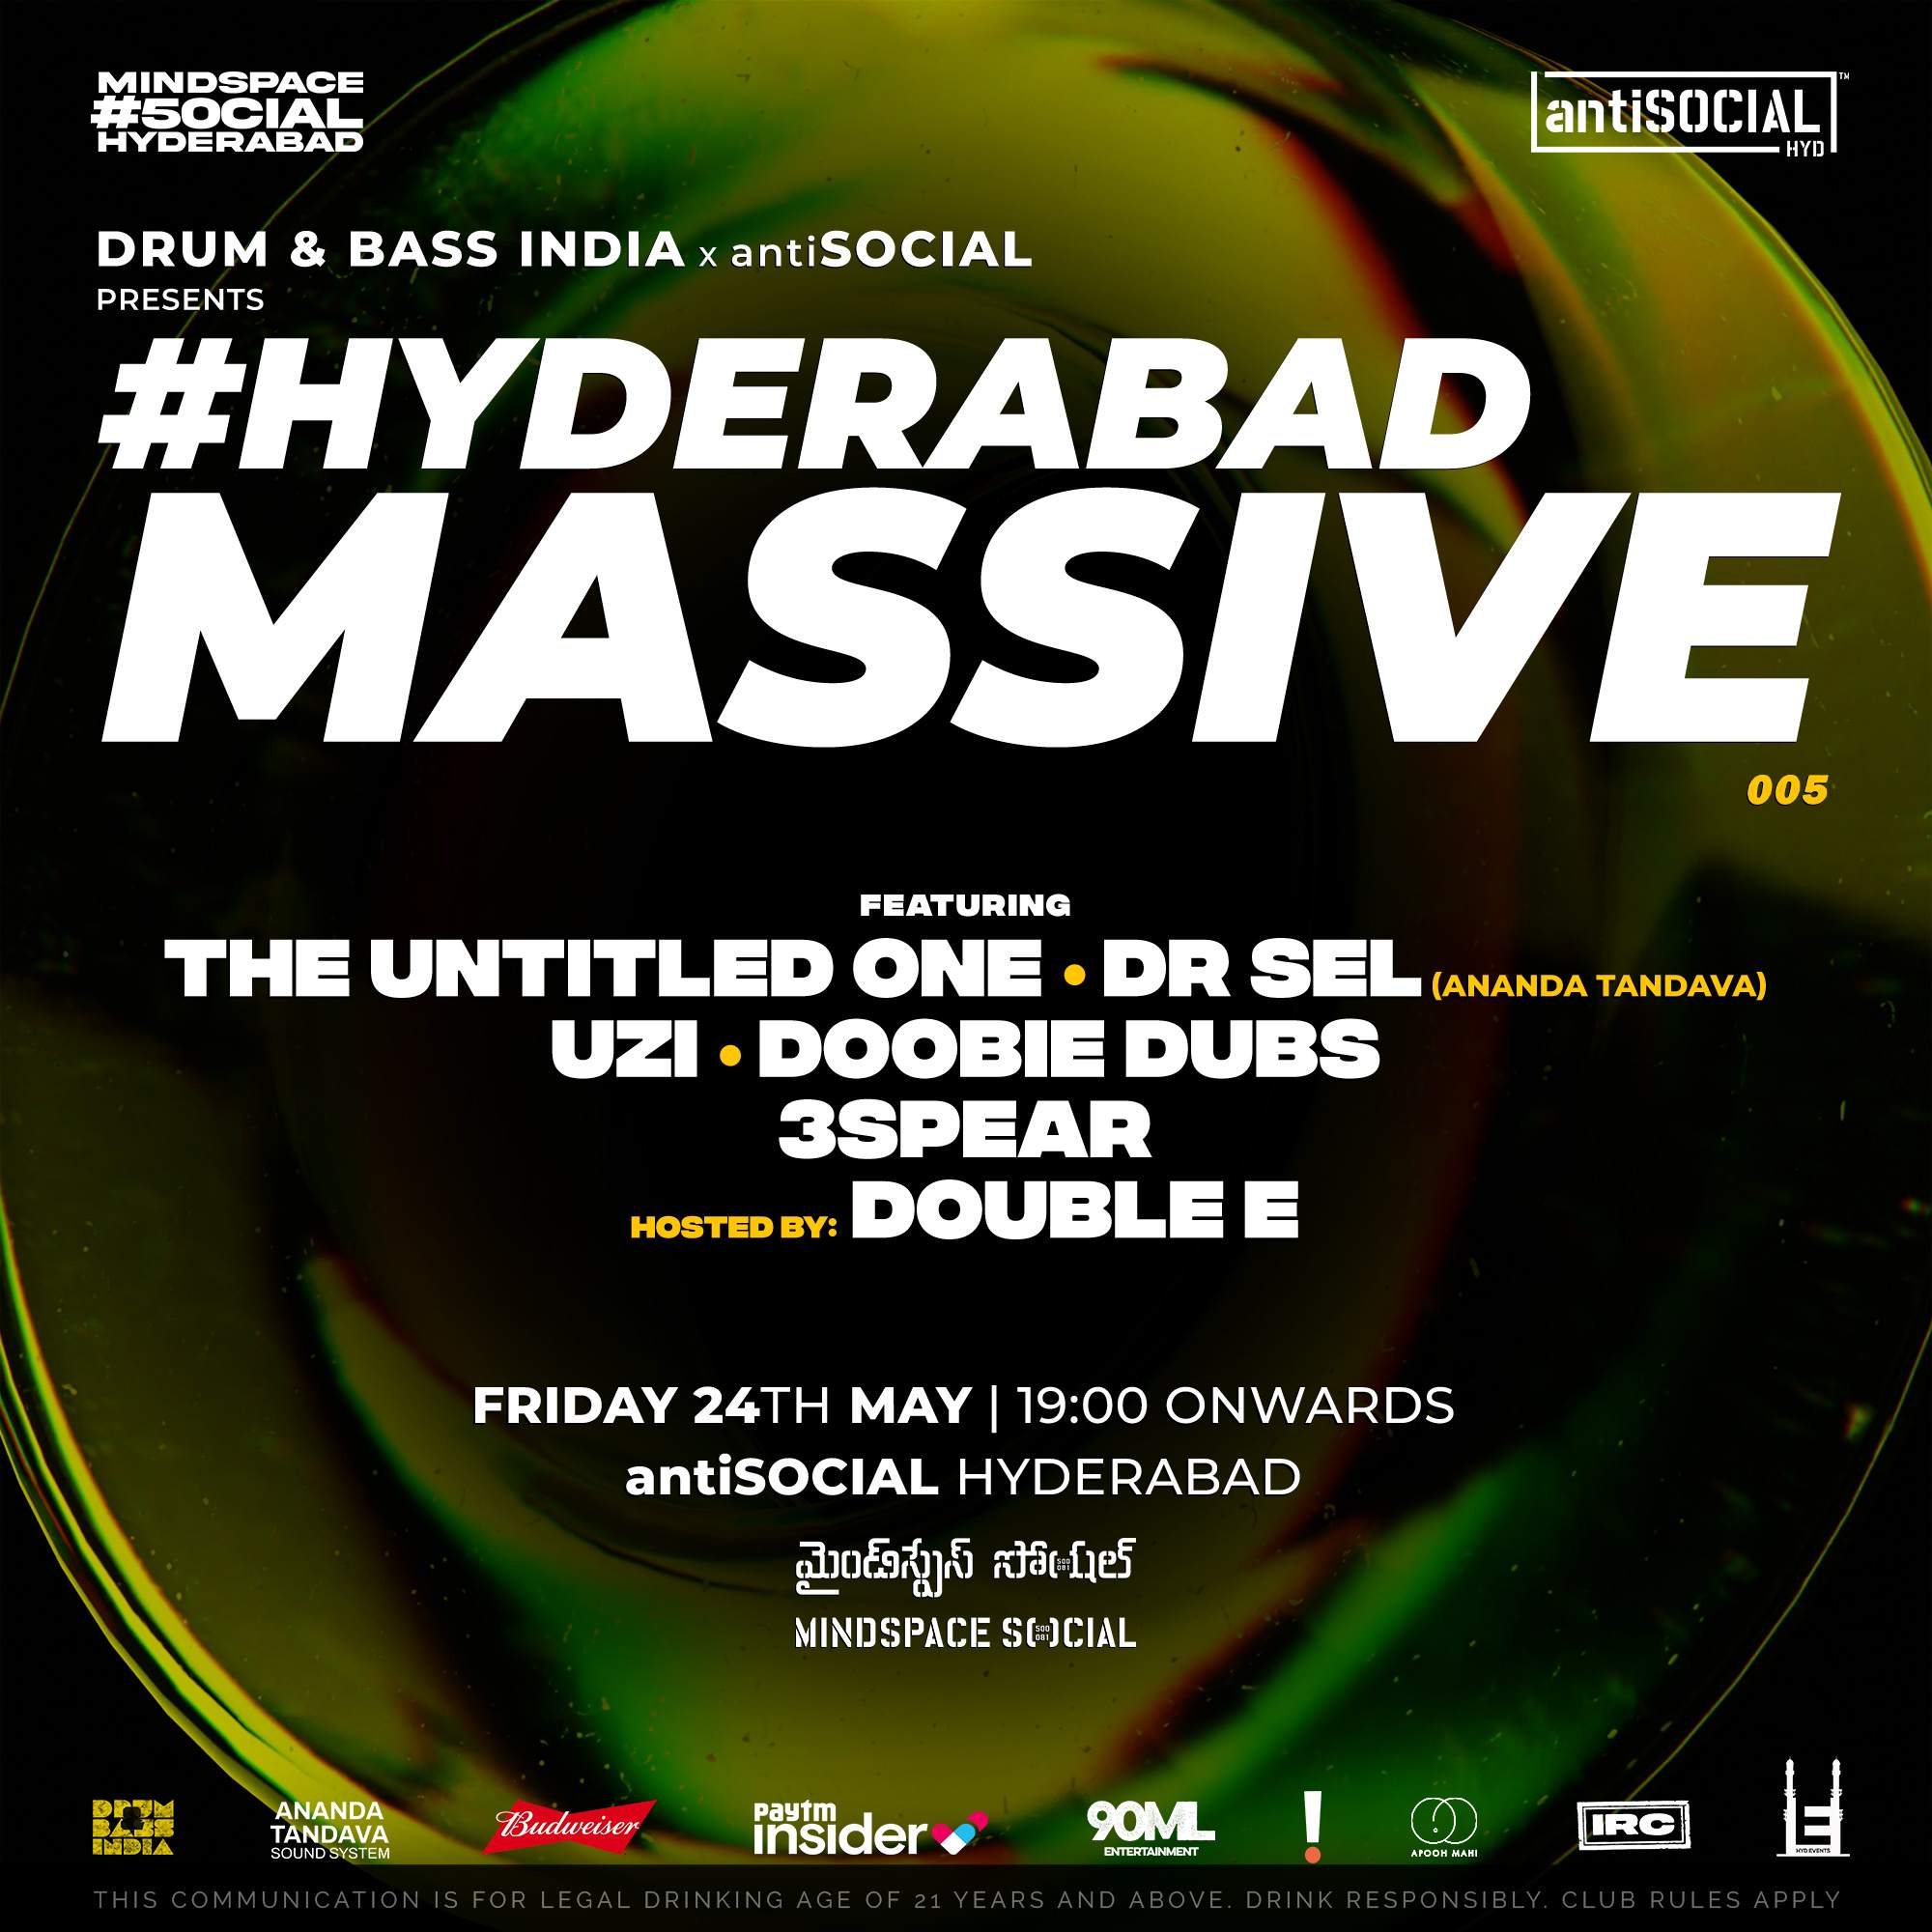 DnBIndia presents - #HyderabadMassive 005 at antiSOCIAL [HYD] - フライヤー裏